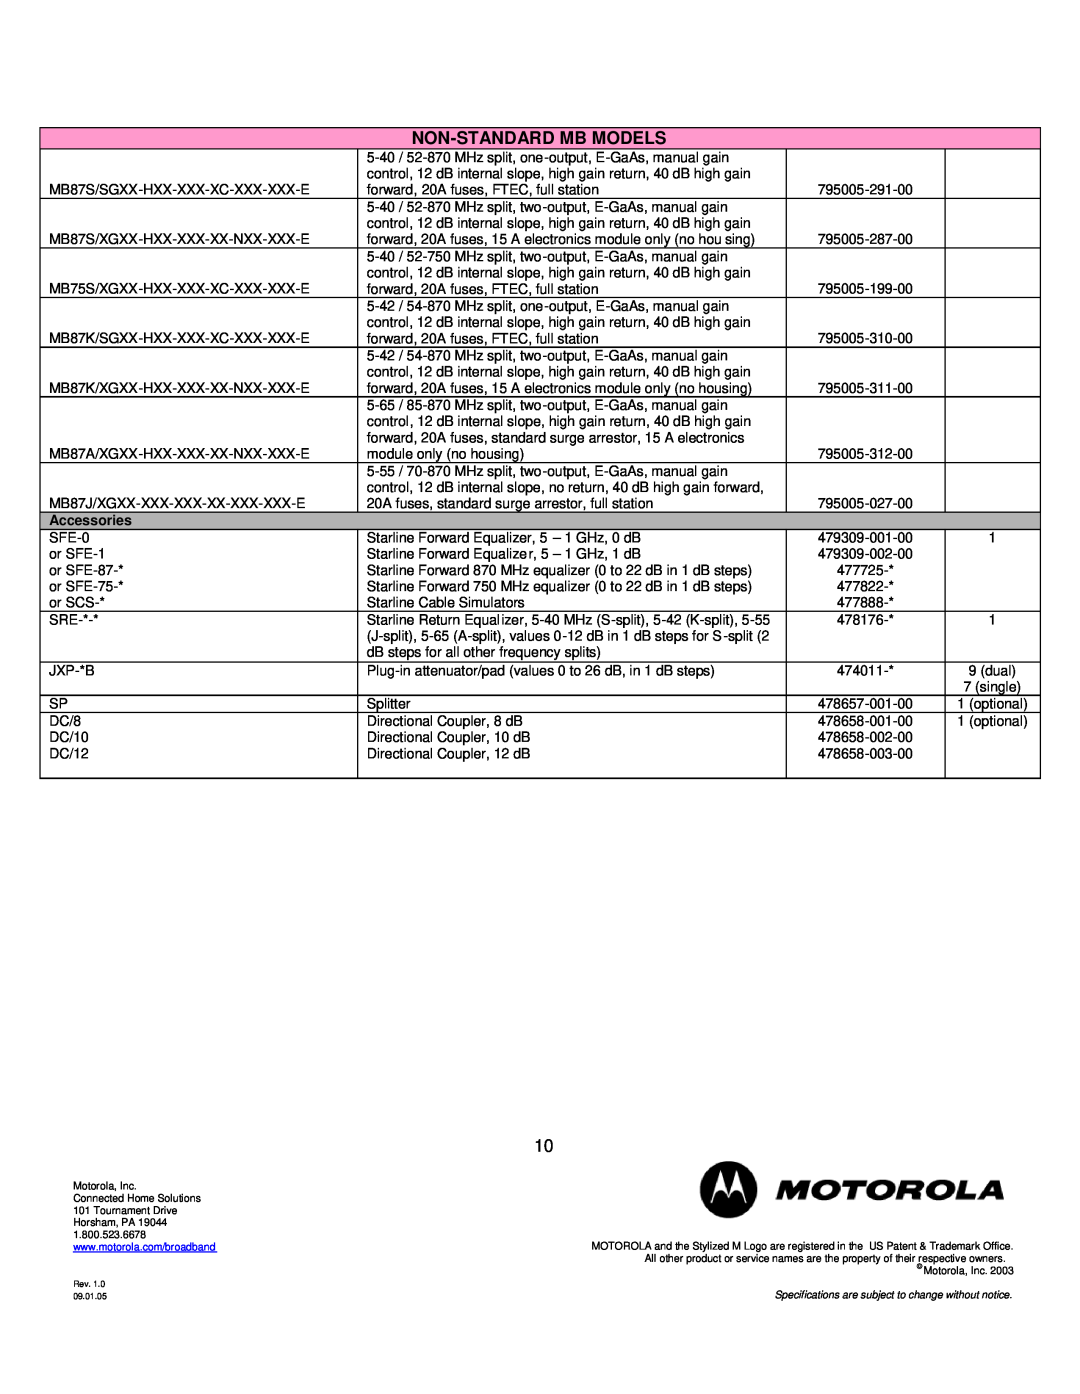 Motorola MB87 specifications Non-Standardmb Models, Accessories 